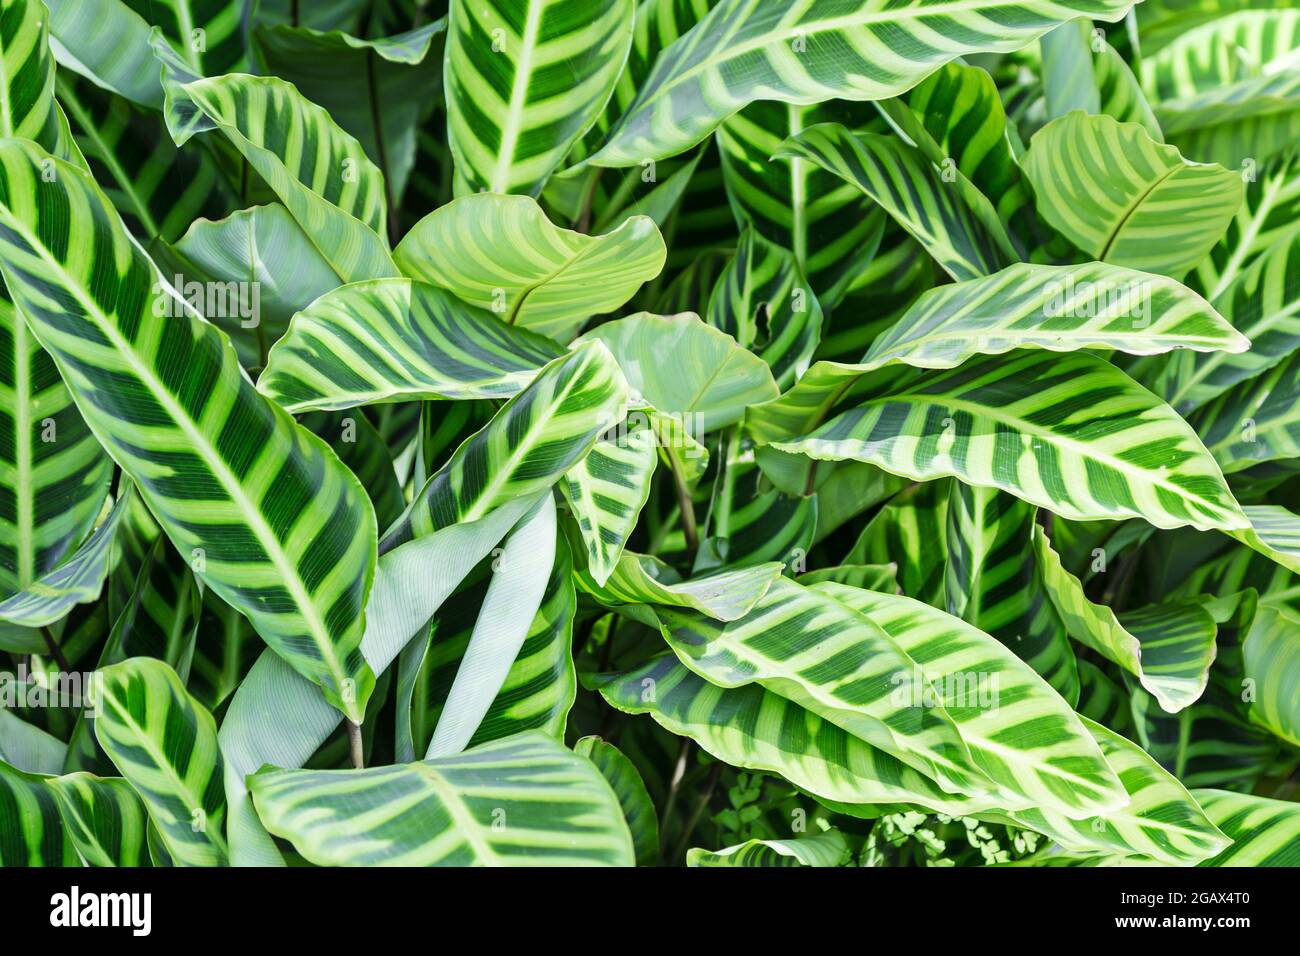 Zebra Plant (Calathea zebrina) family Marantaceae is a beautiful leafy plant texture. Stock Photo